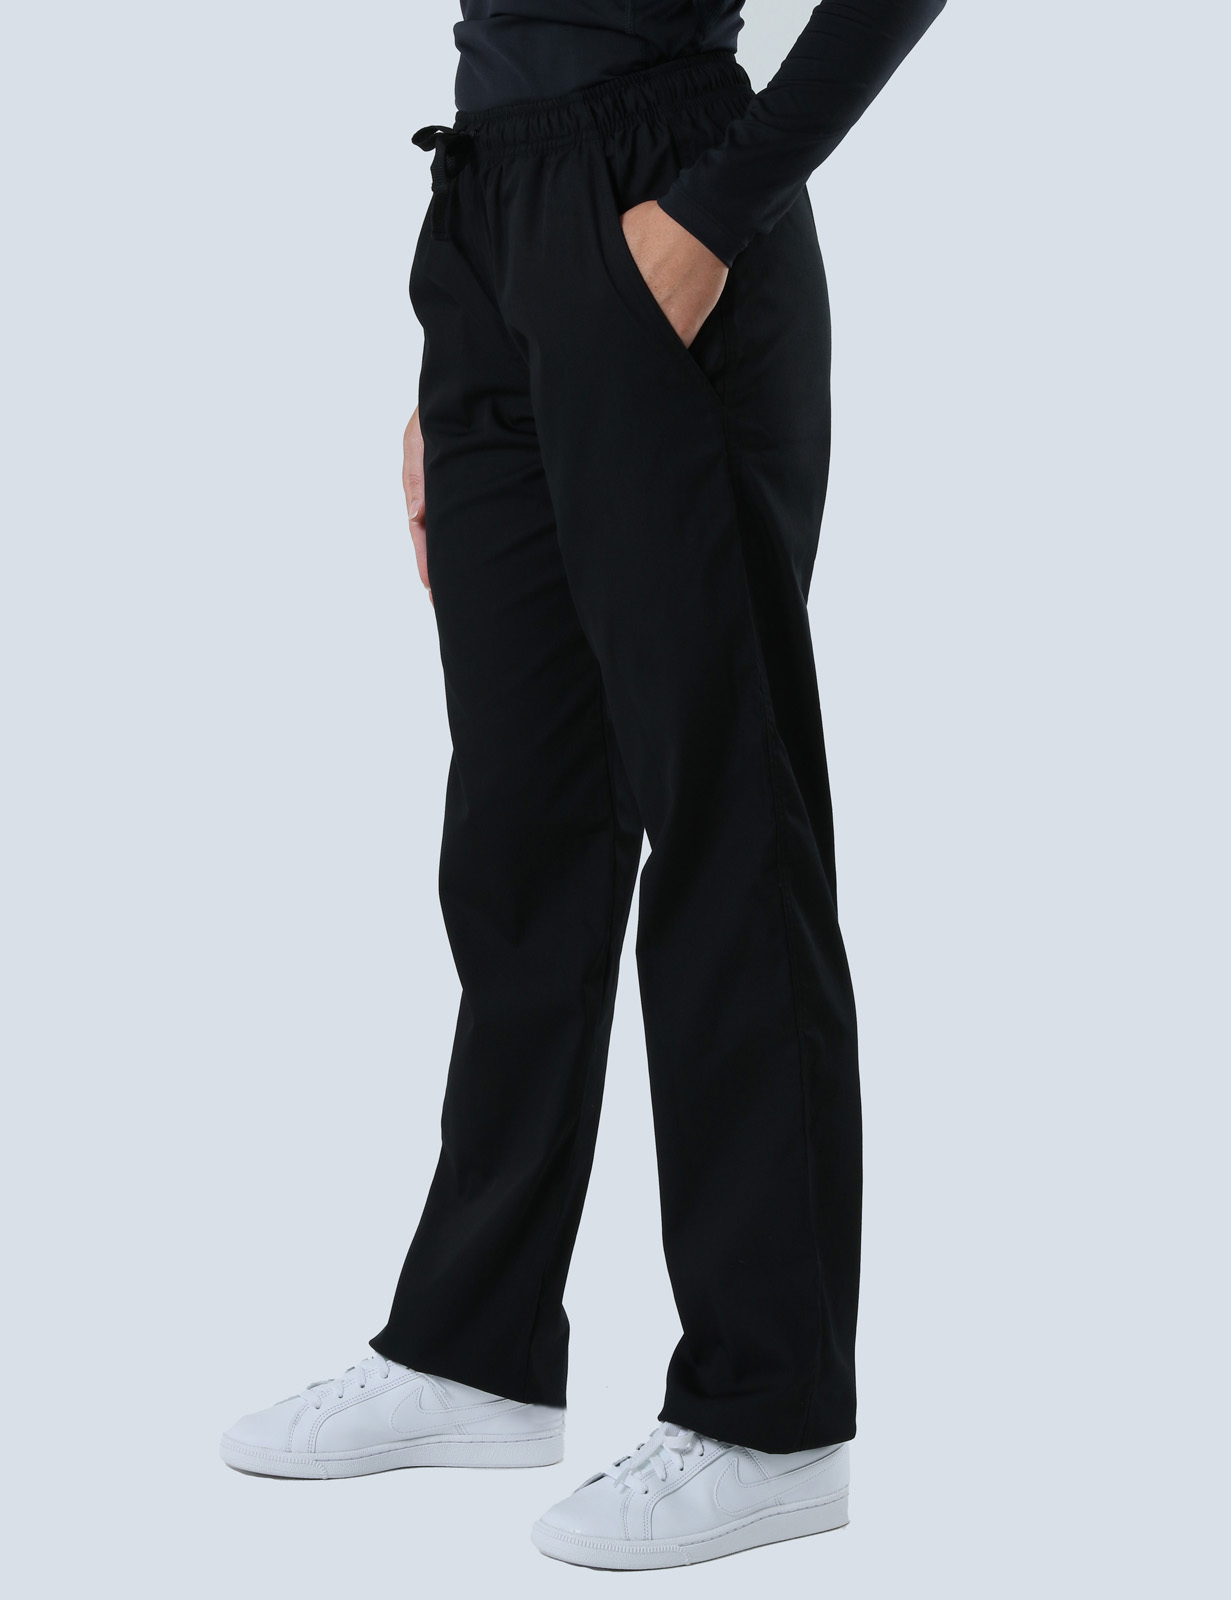 Women's Regular Cut Pants - Black - X Large